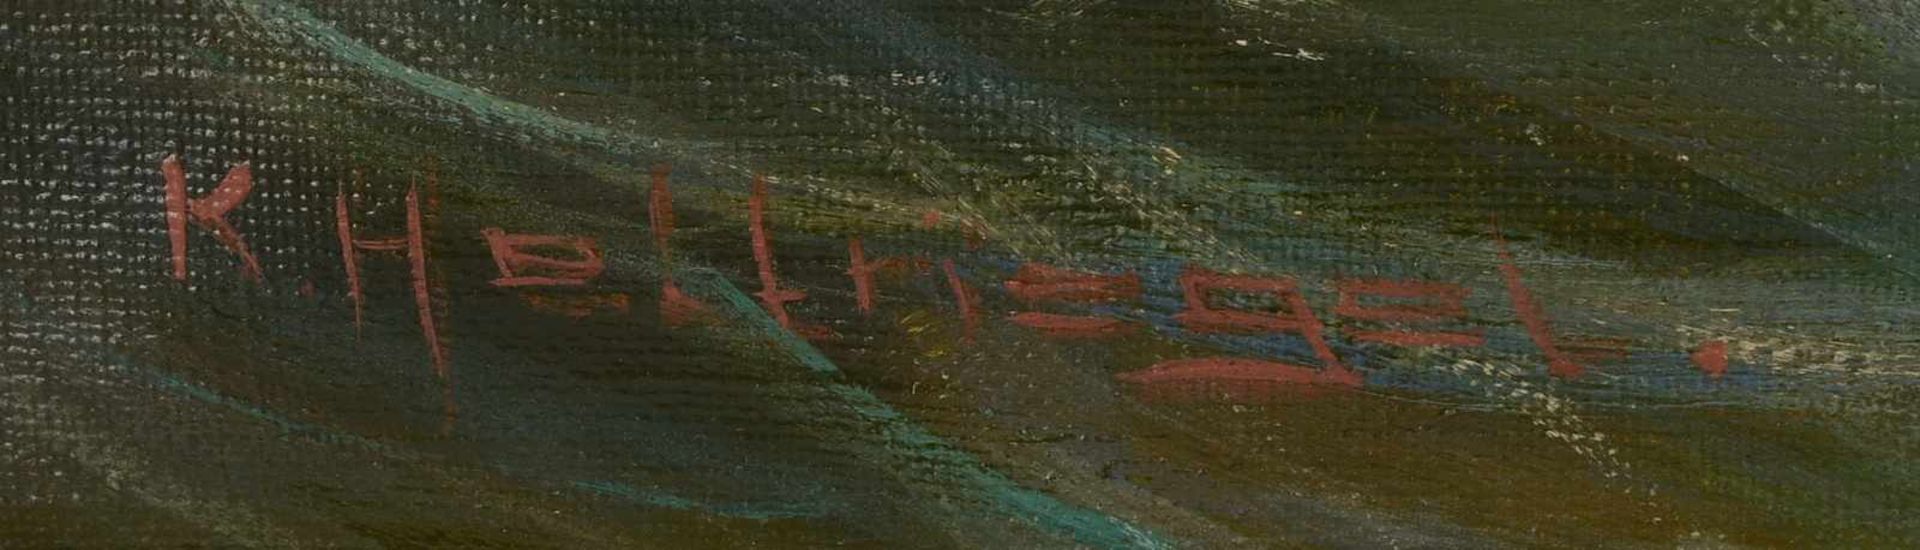 Hellnagel, K., Gemälde, 'Kutter B7 auf See', Öl/Lw, signiert; Bildmaße 50 x 65 cm, Rahmenmaße 60 x - Bild 2 aus 2